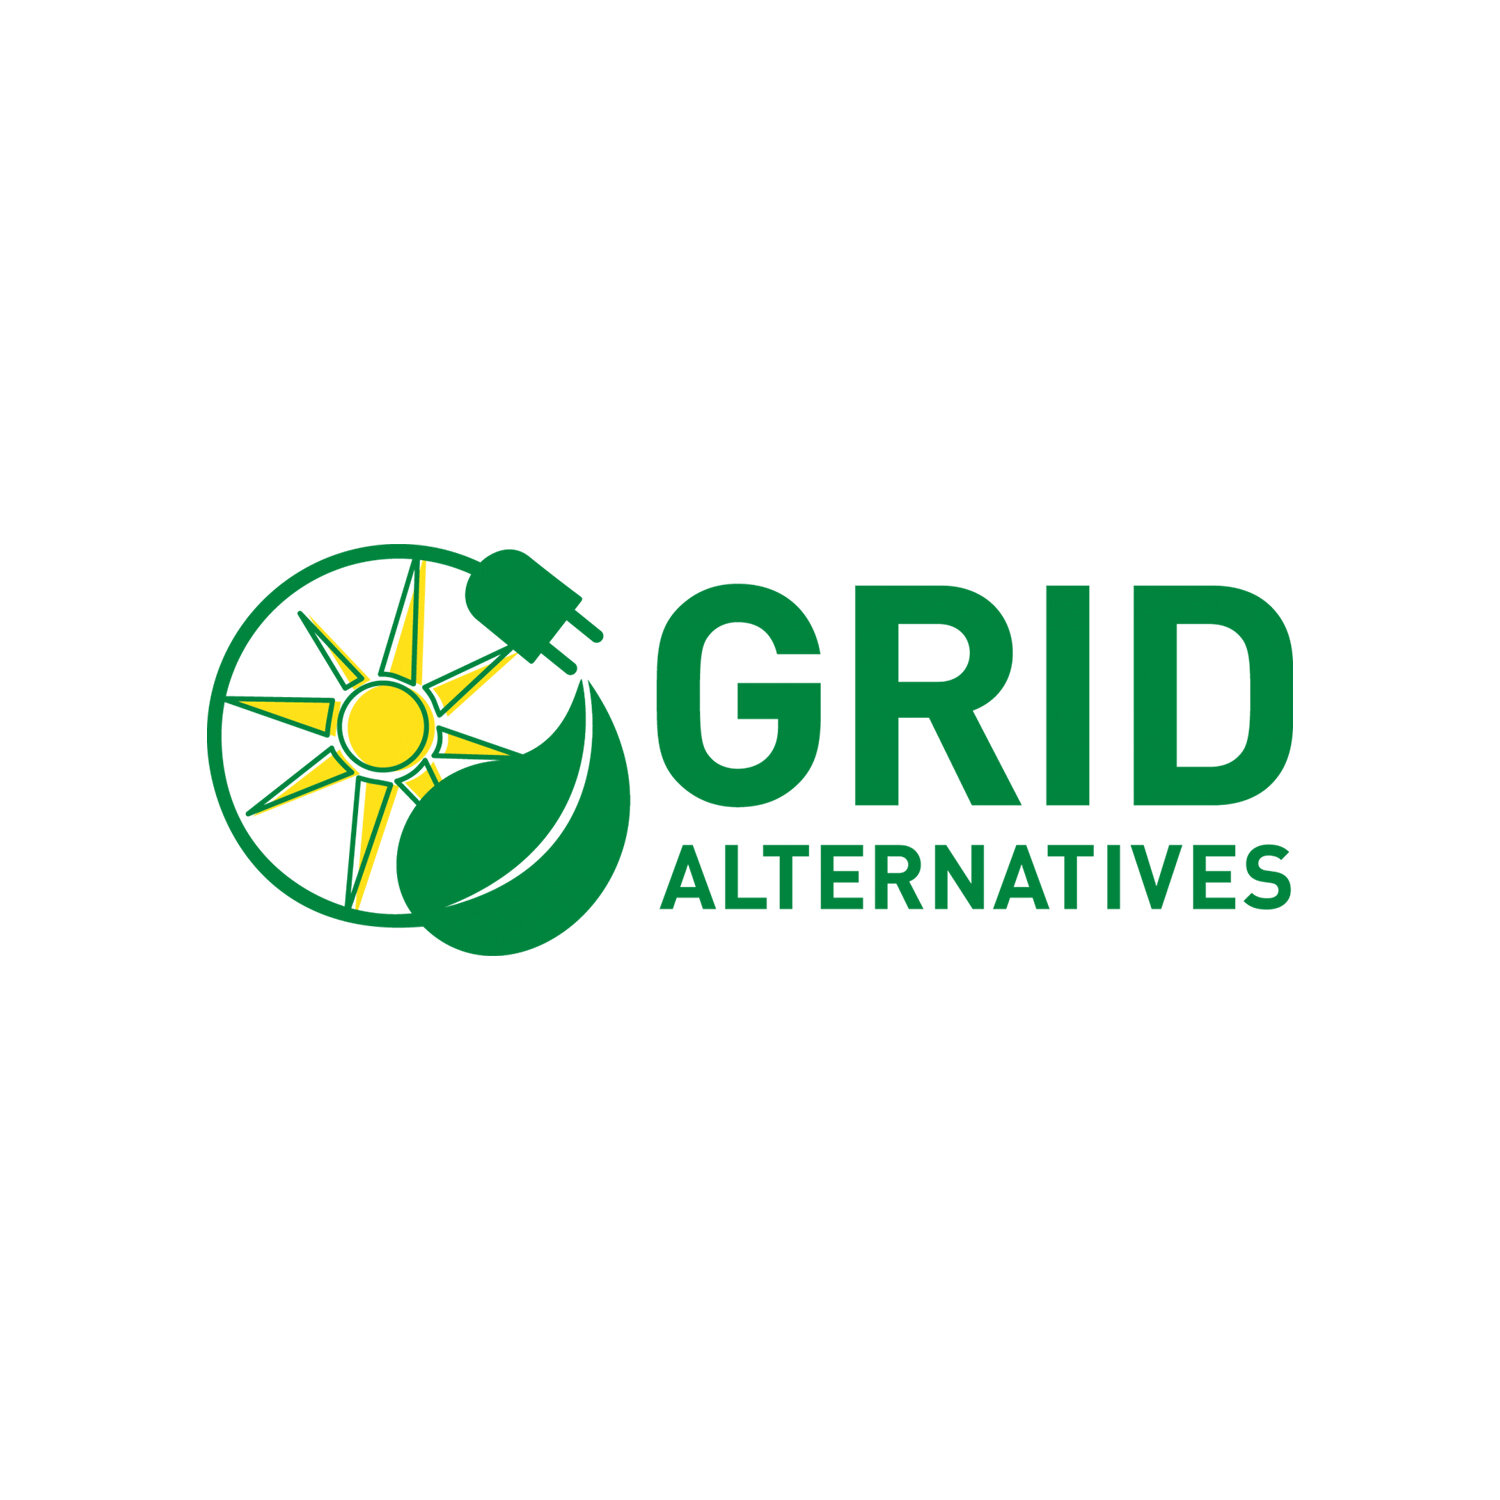 grid-alternatives-logo-1500px.jpg